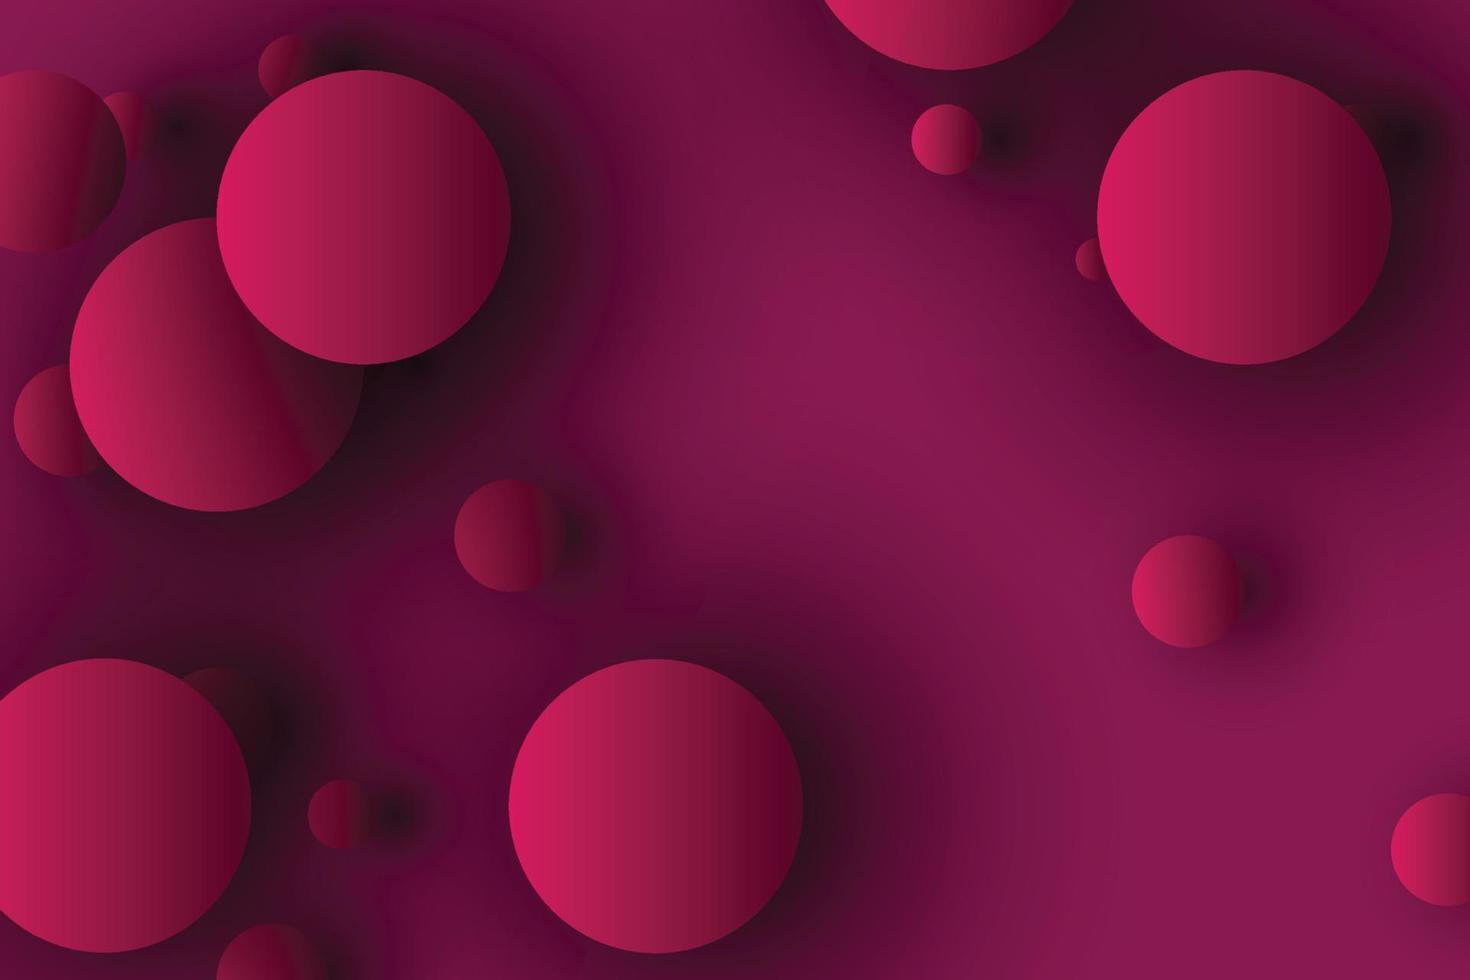 Pink golden ratio bubble background vector